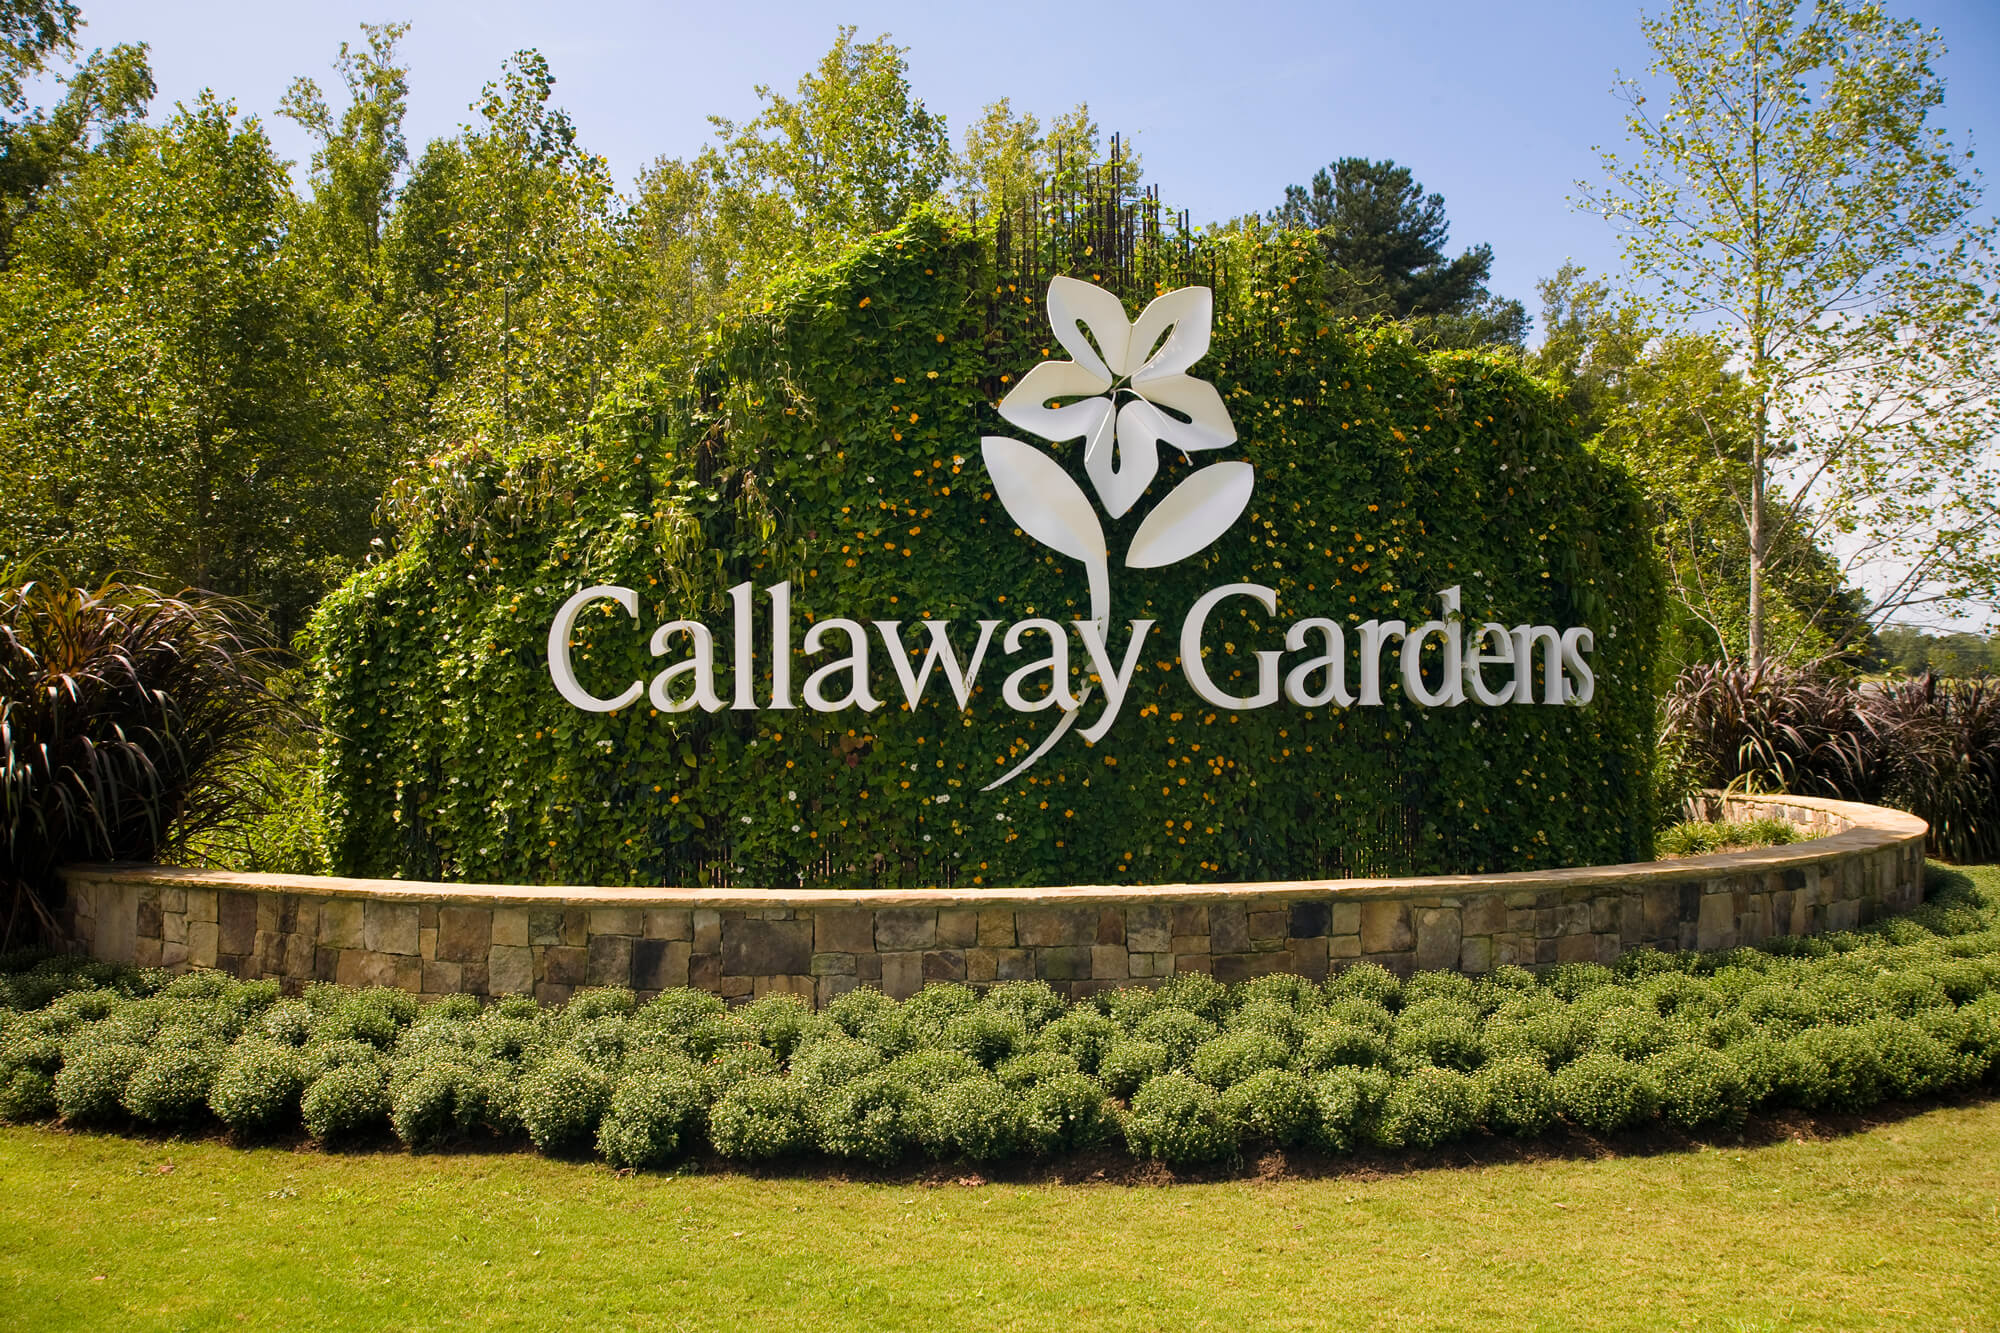 Callaway Gardens implements Guestware guest management software